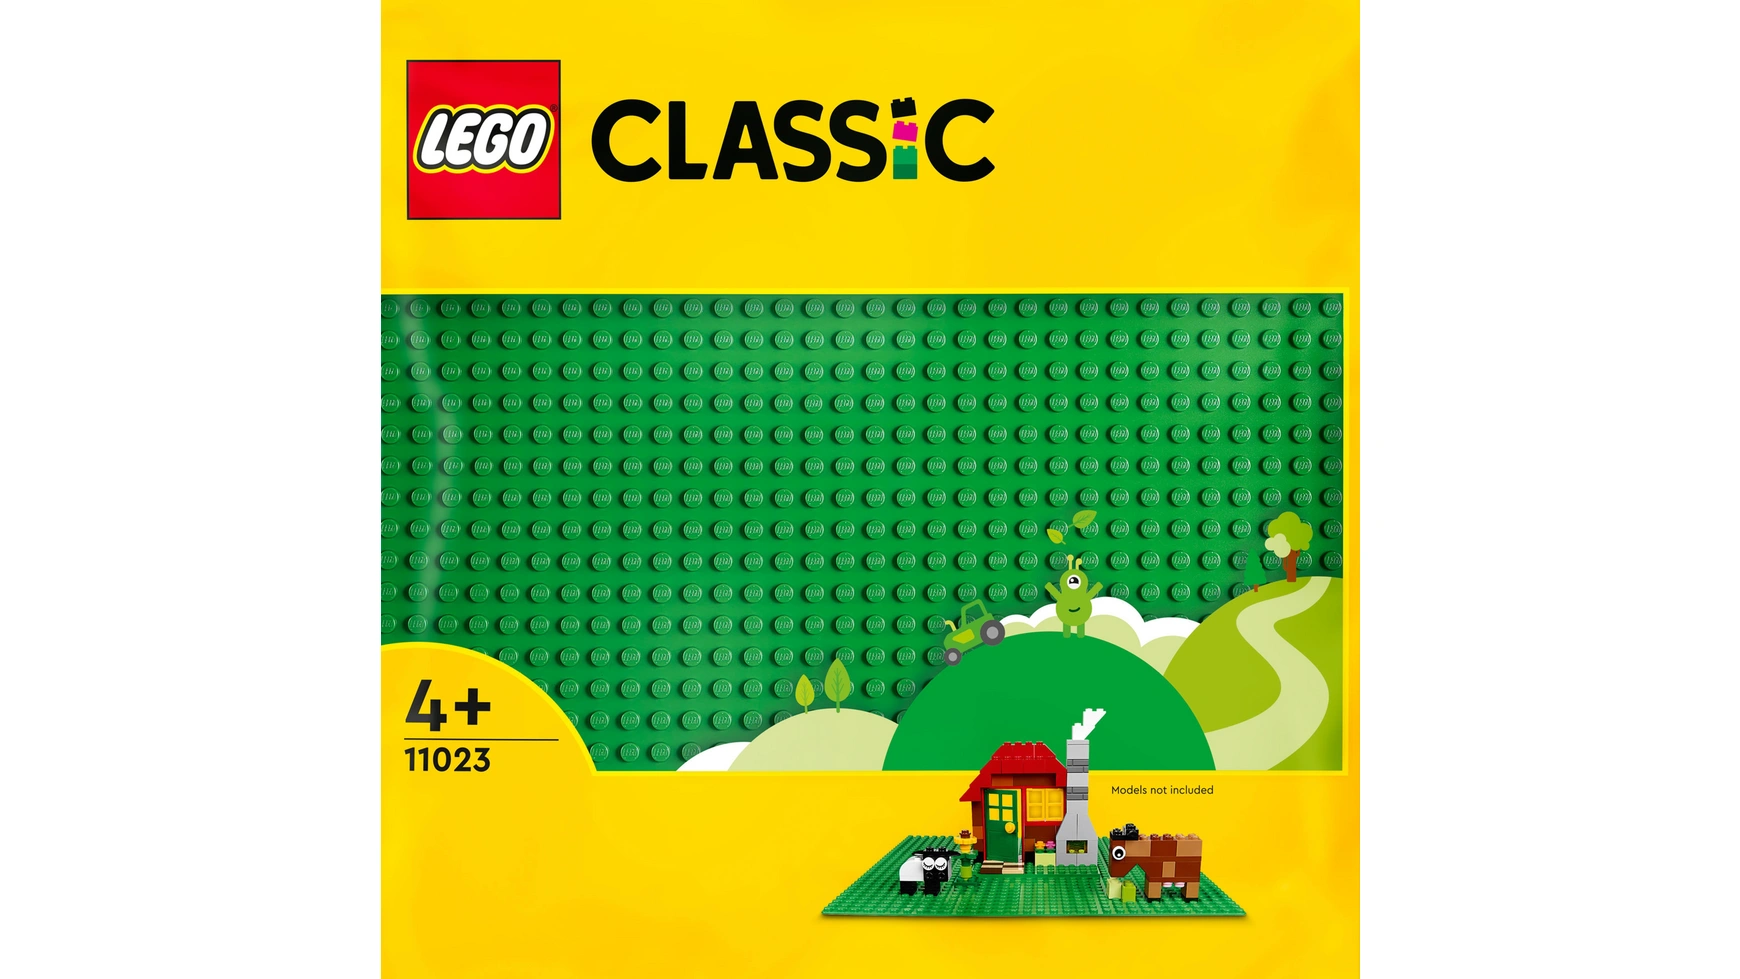 Lego Classic Зеленая строительная пластина, опорная плита для наборов Lego, 32x32 lego classic белая строительная пластина опорная плита для наборов lego 32x32